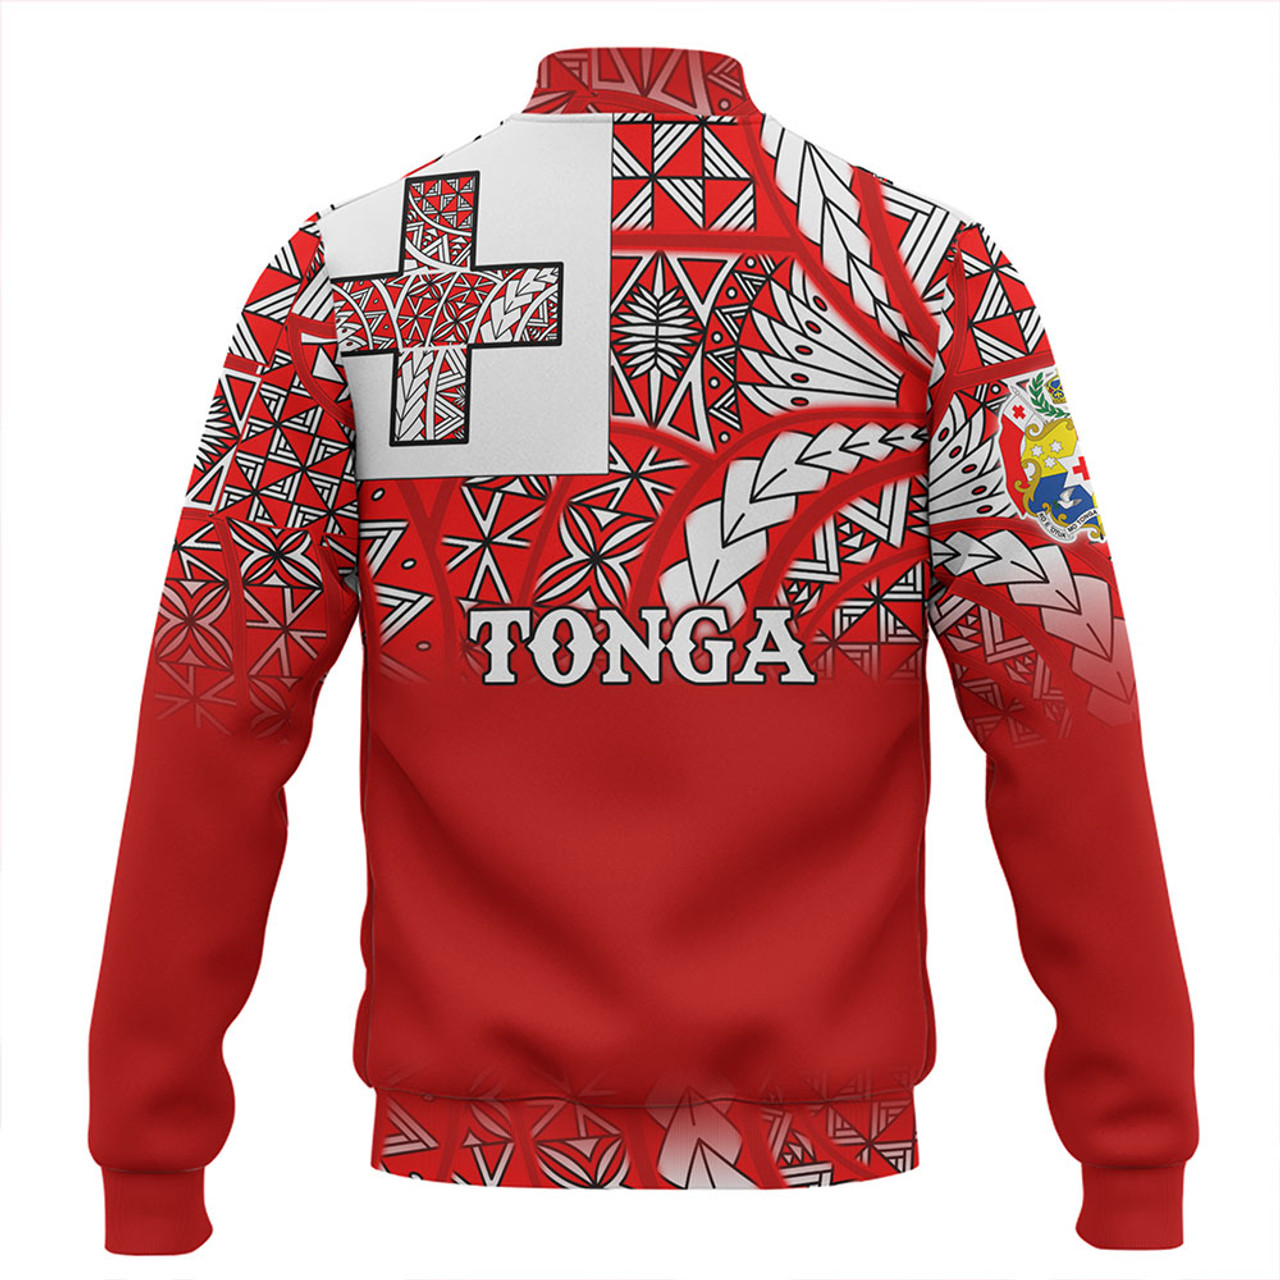 Tonga Baseball Jacket - Tonga Flag Color With Traditional Patterns